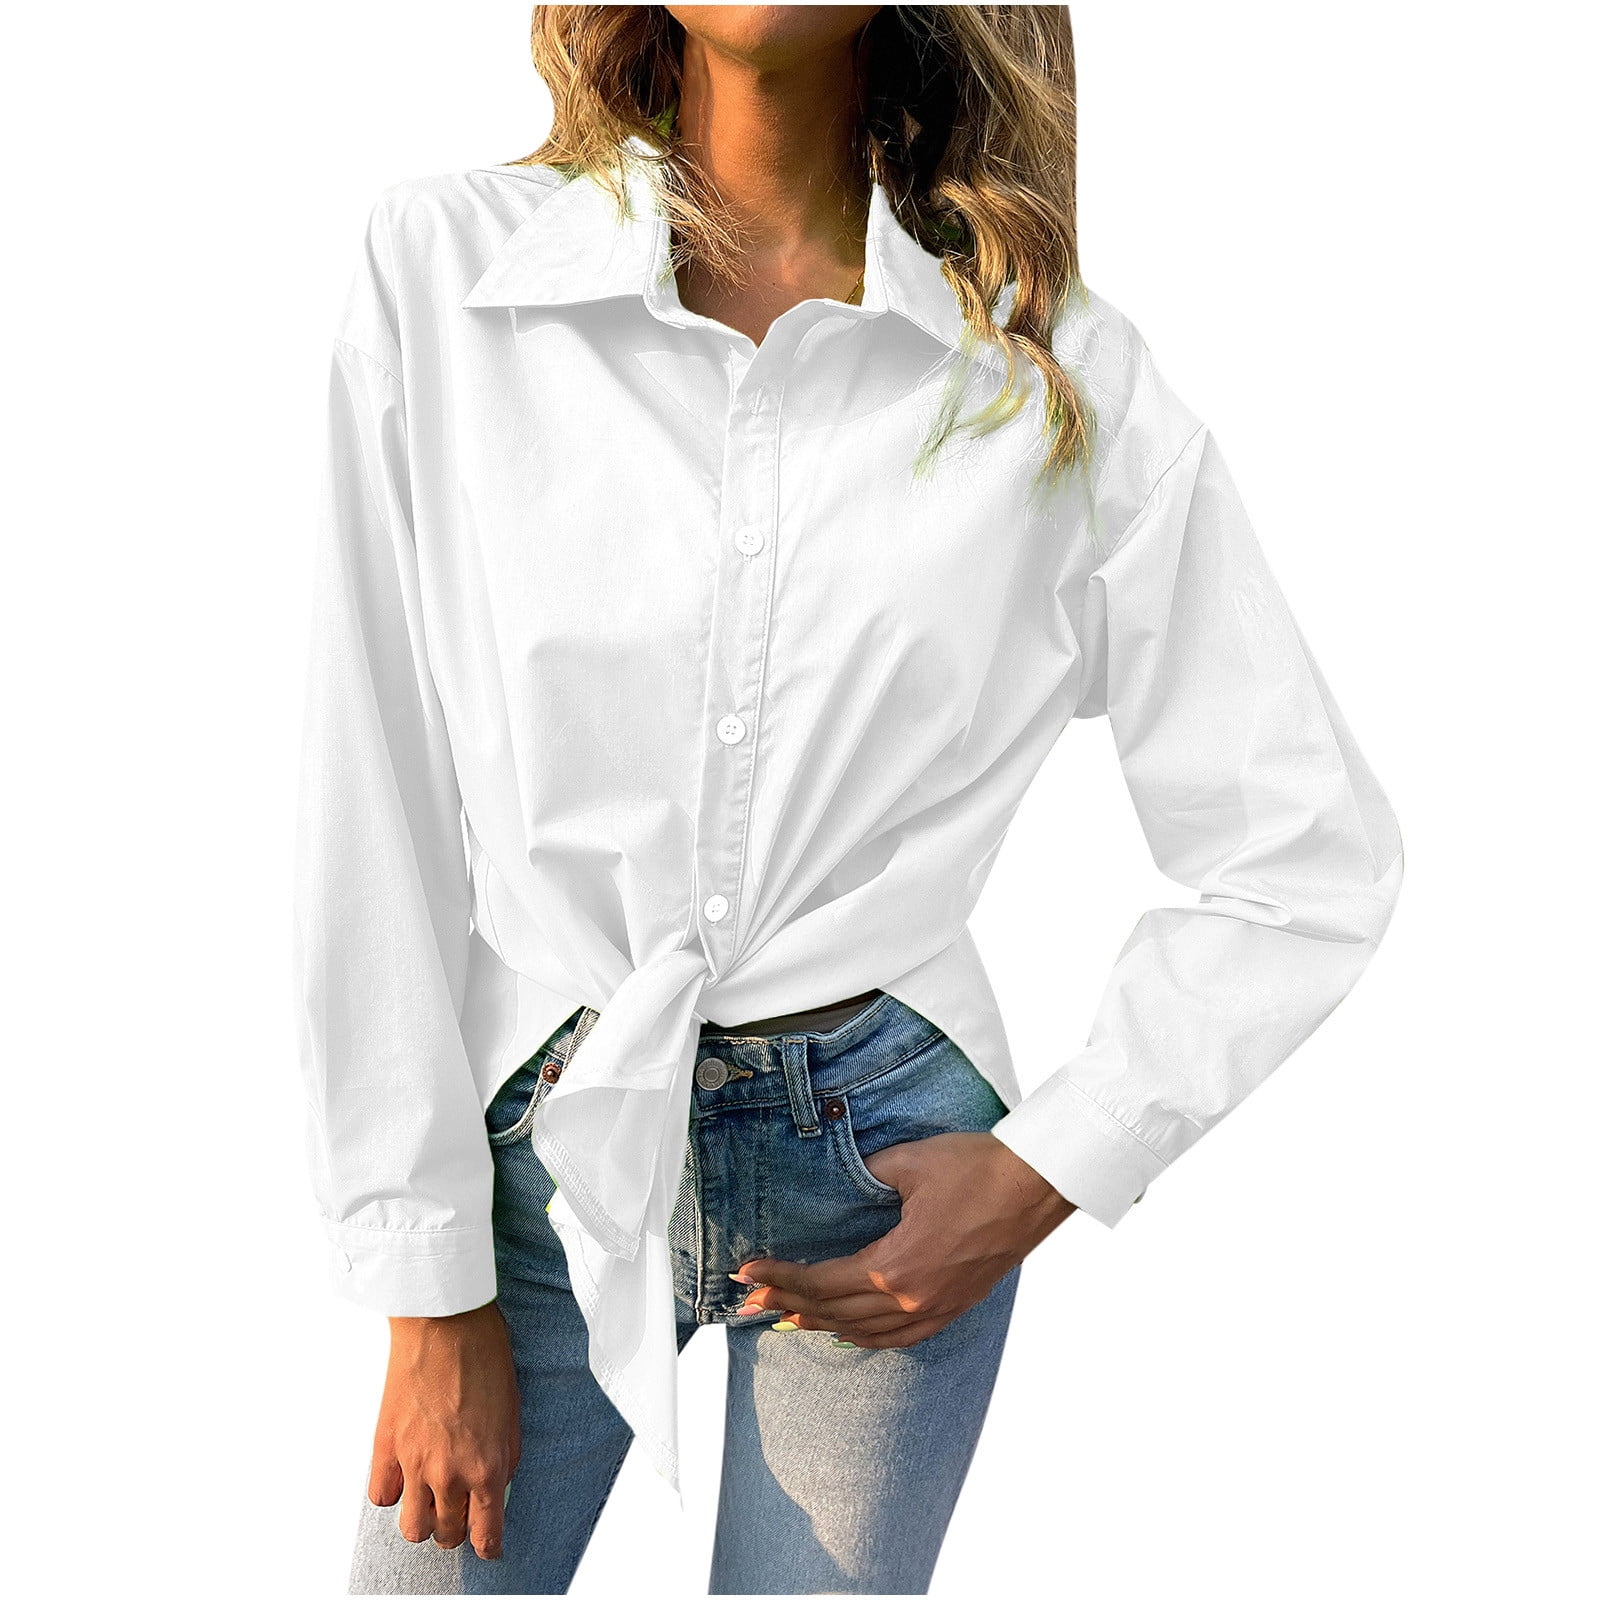 Scyoekwg Womens Button Down Shirt Comfy Long Sleeve Shirts